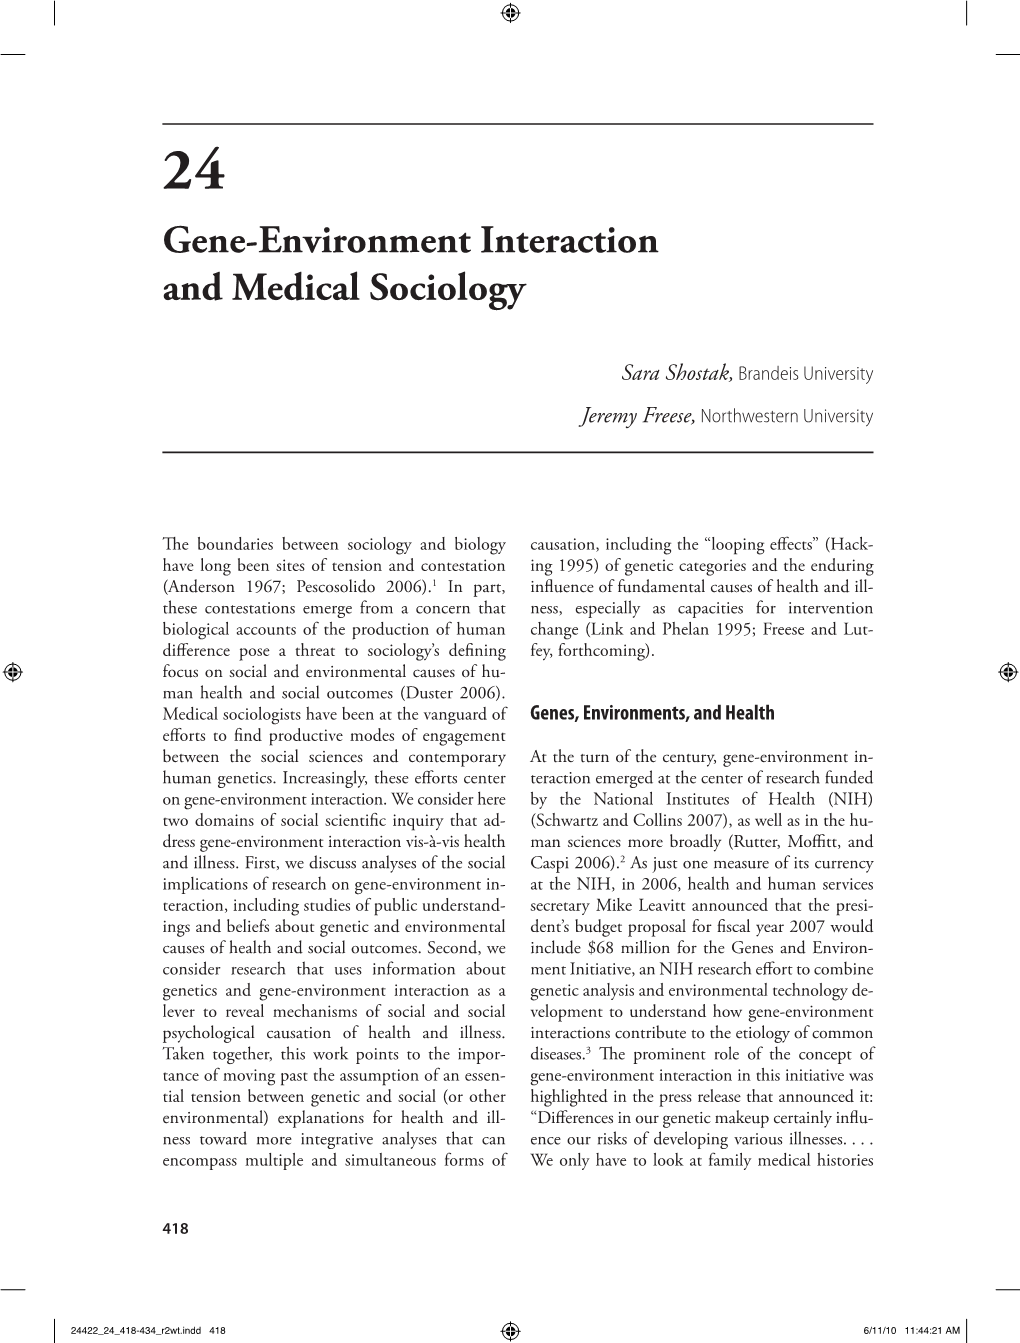 Gene-Environment Interaction and Medical Sociology